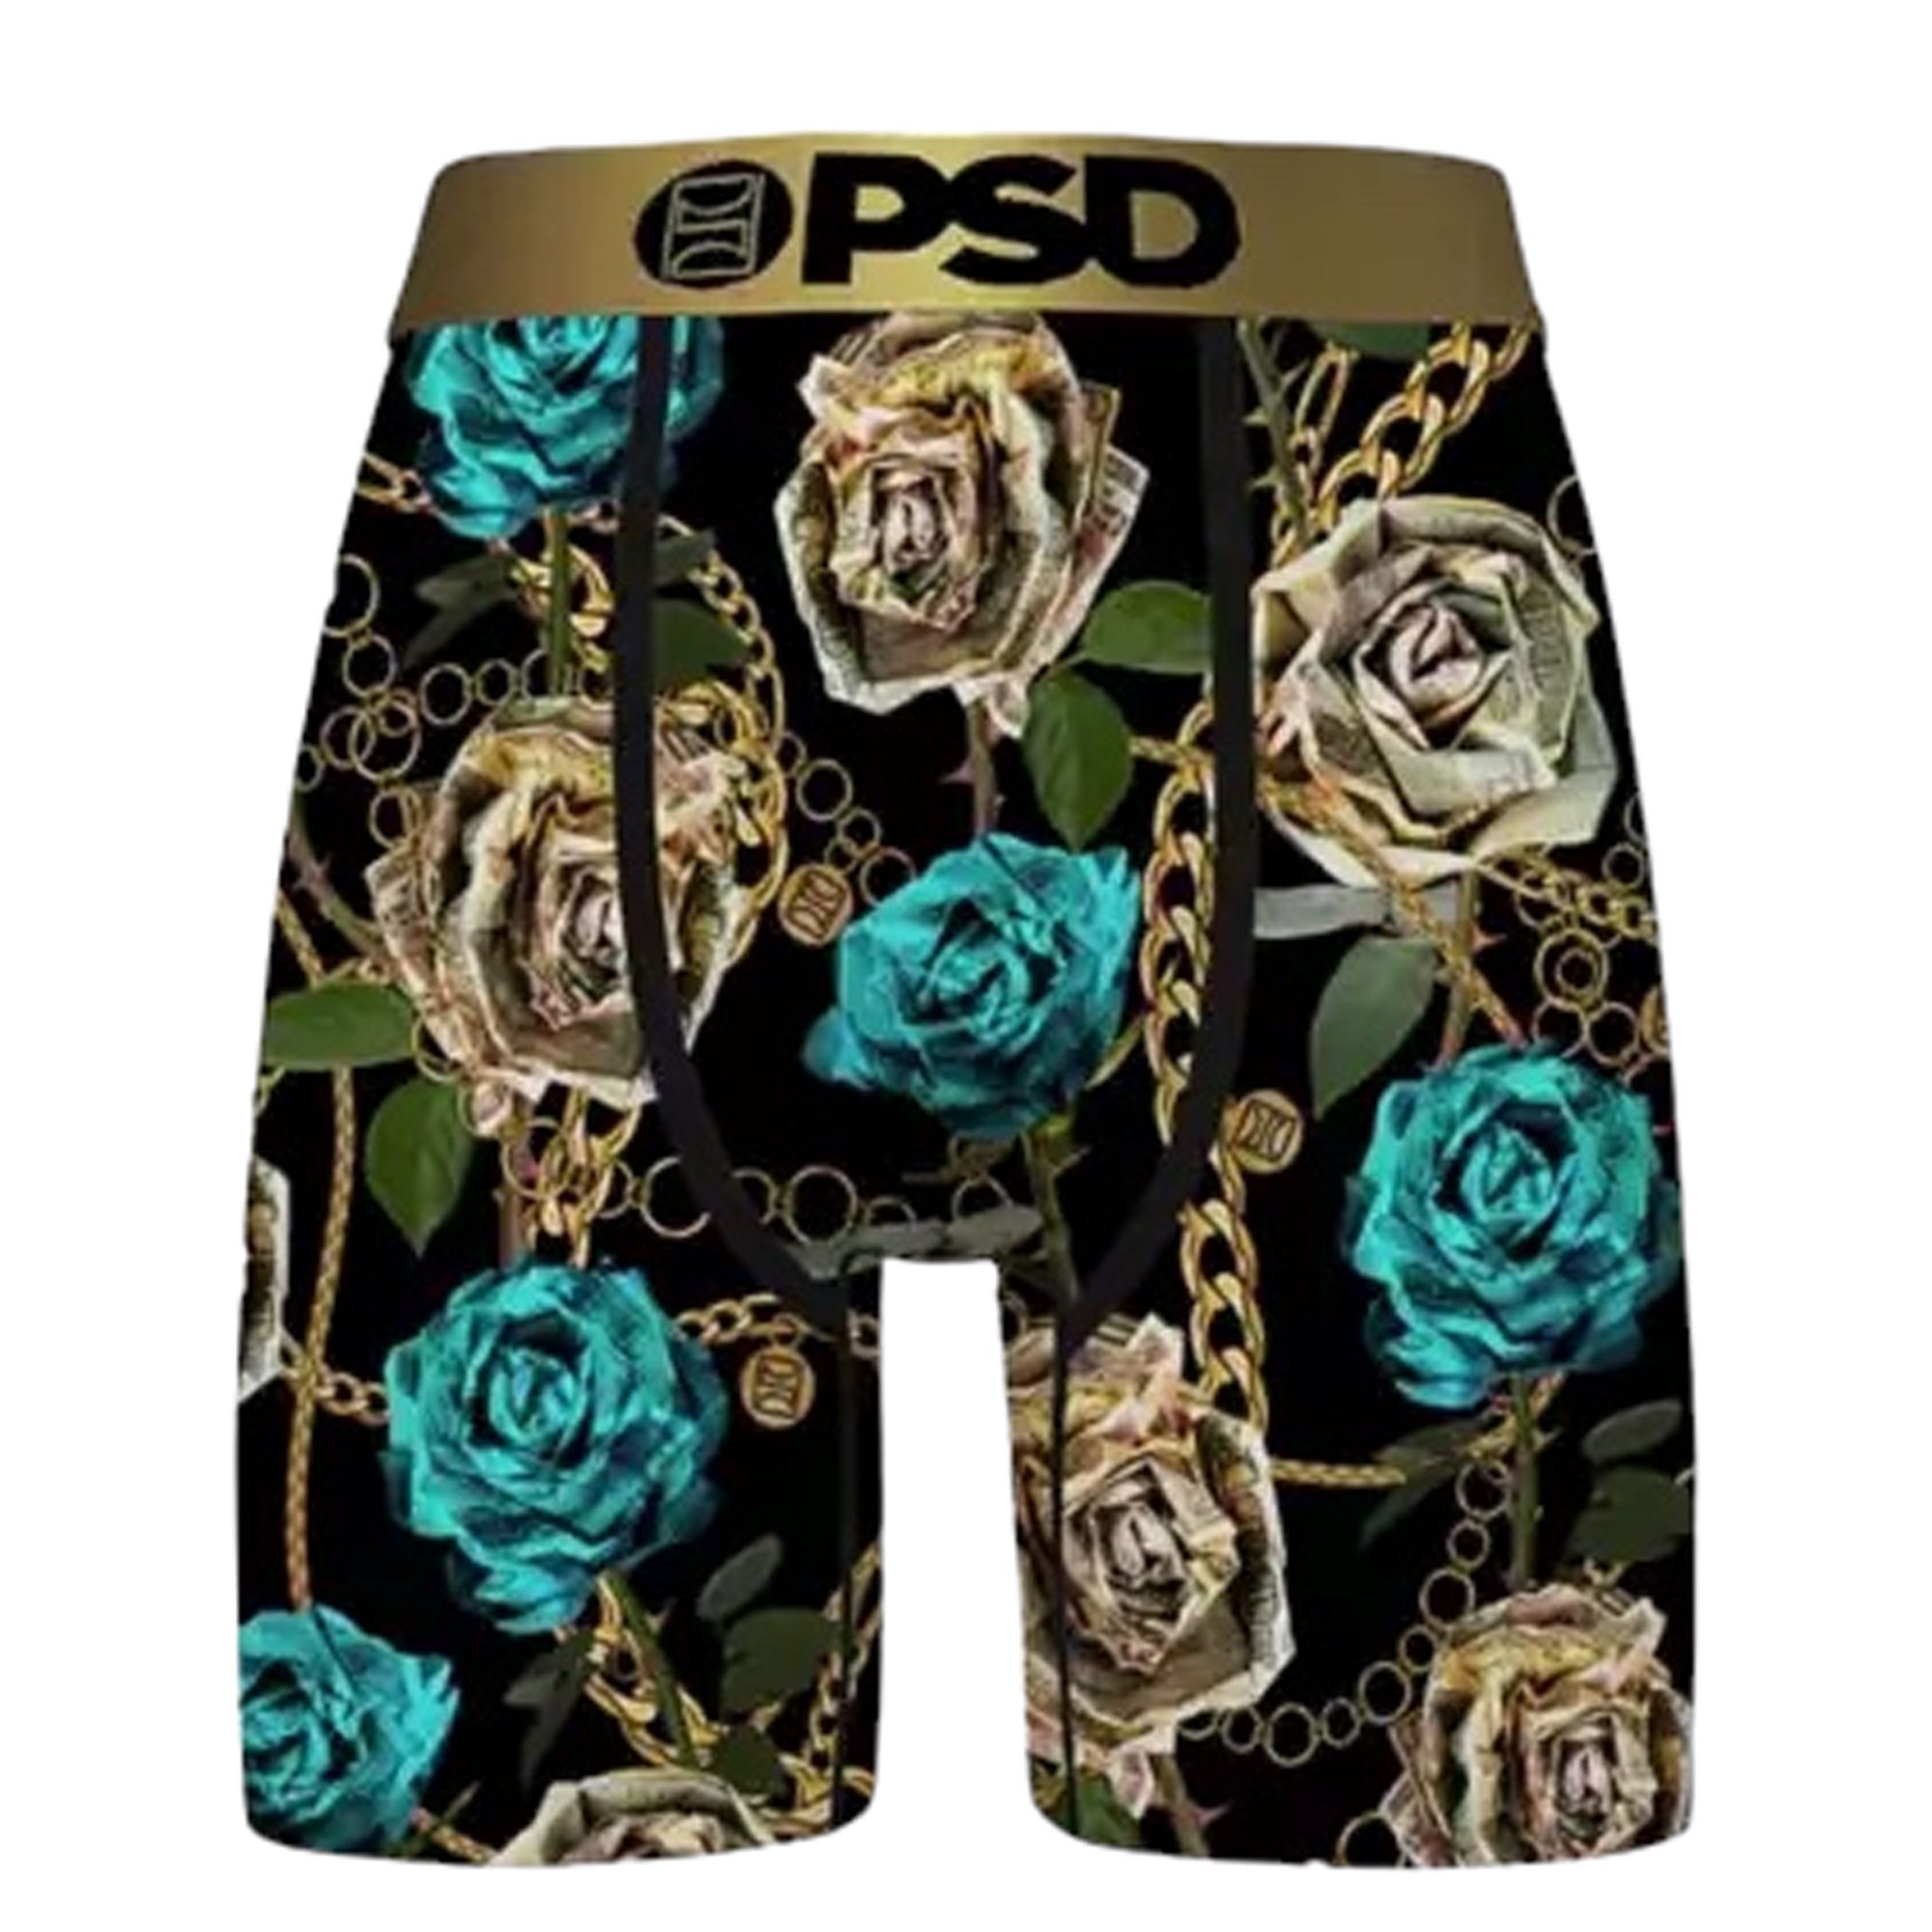 Rose II Boy Short - PSD Underwear